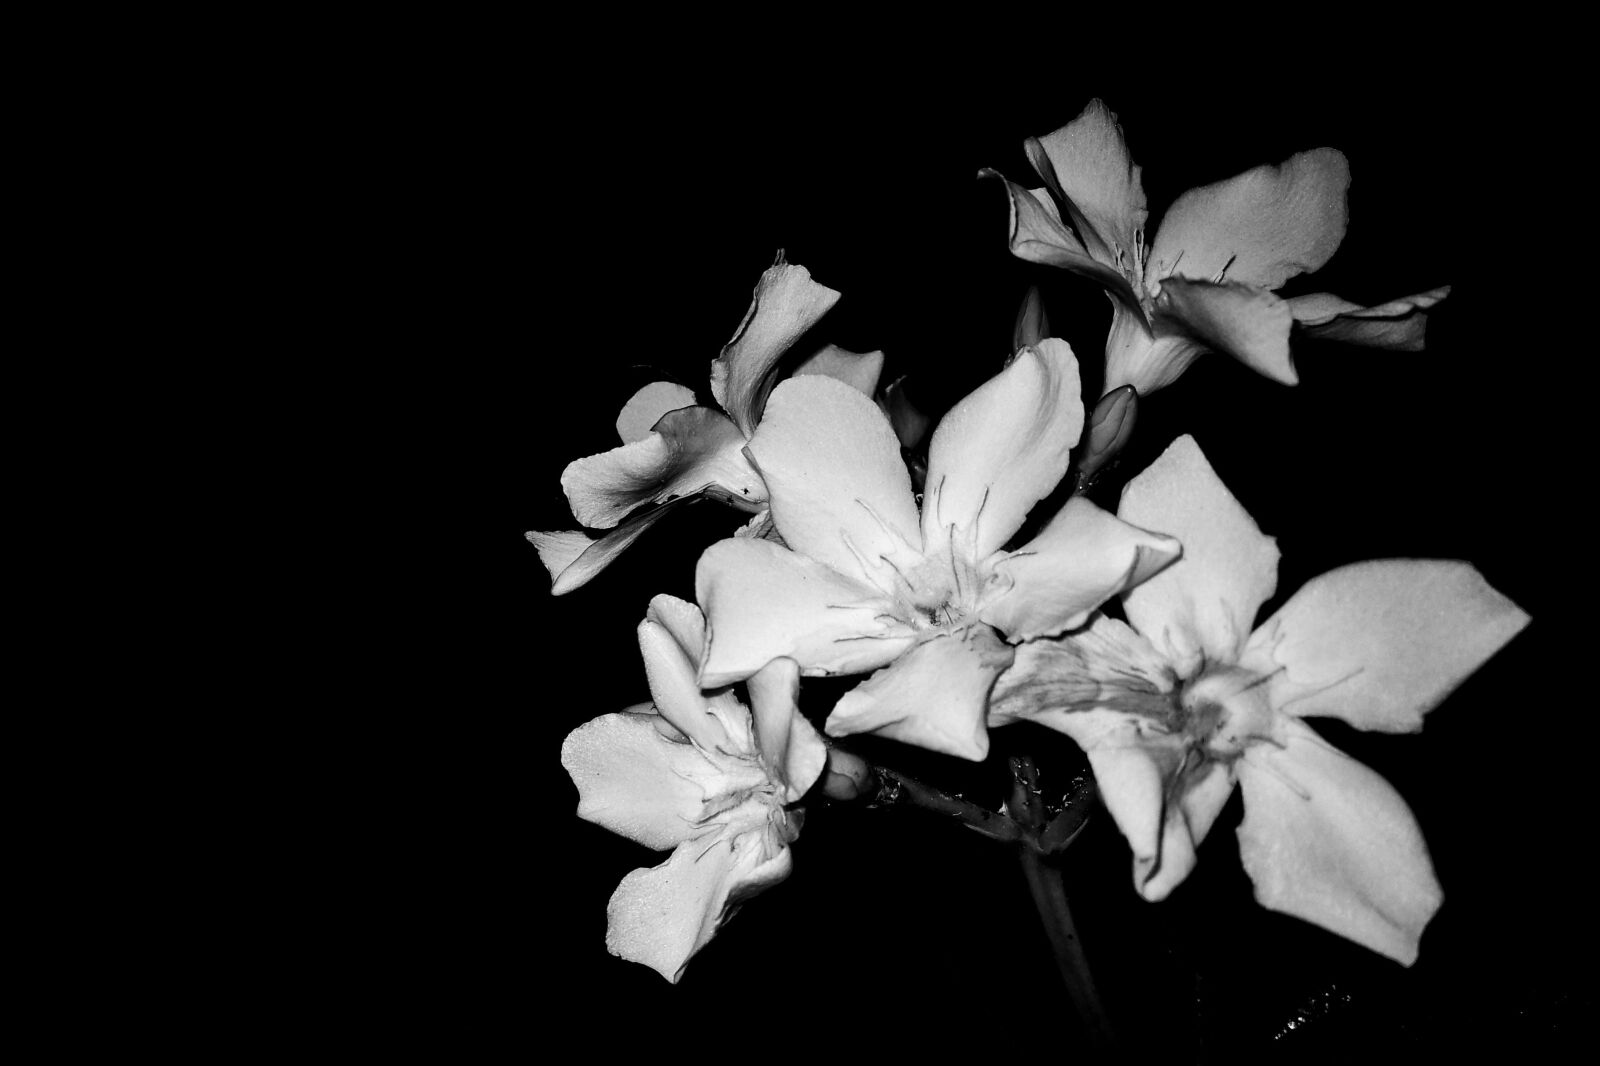 HUAWEI Mate 9 sample photo. Flower, flowers, night photography